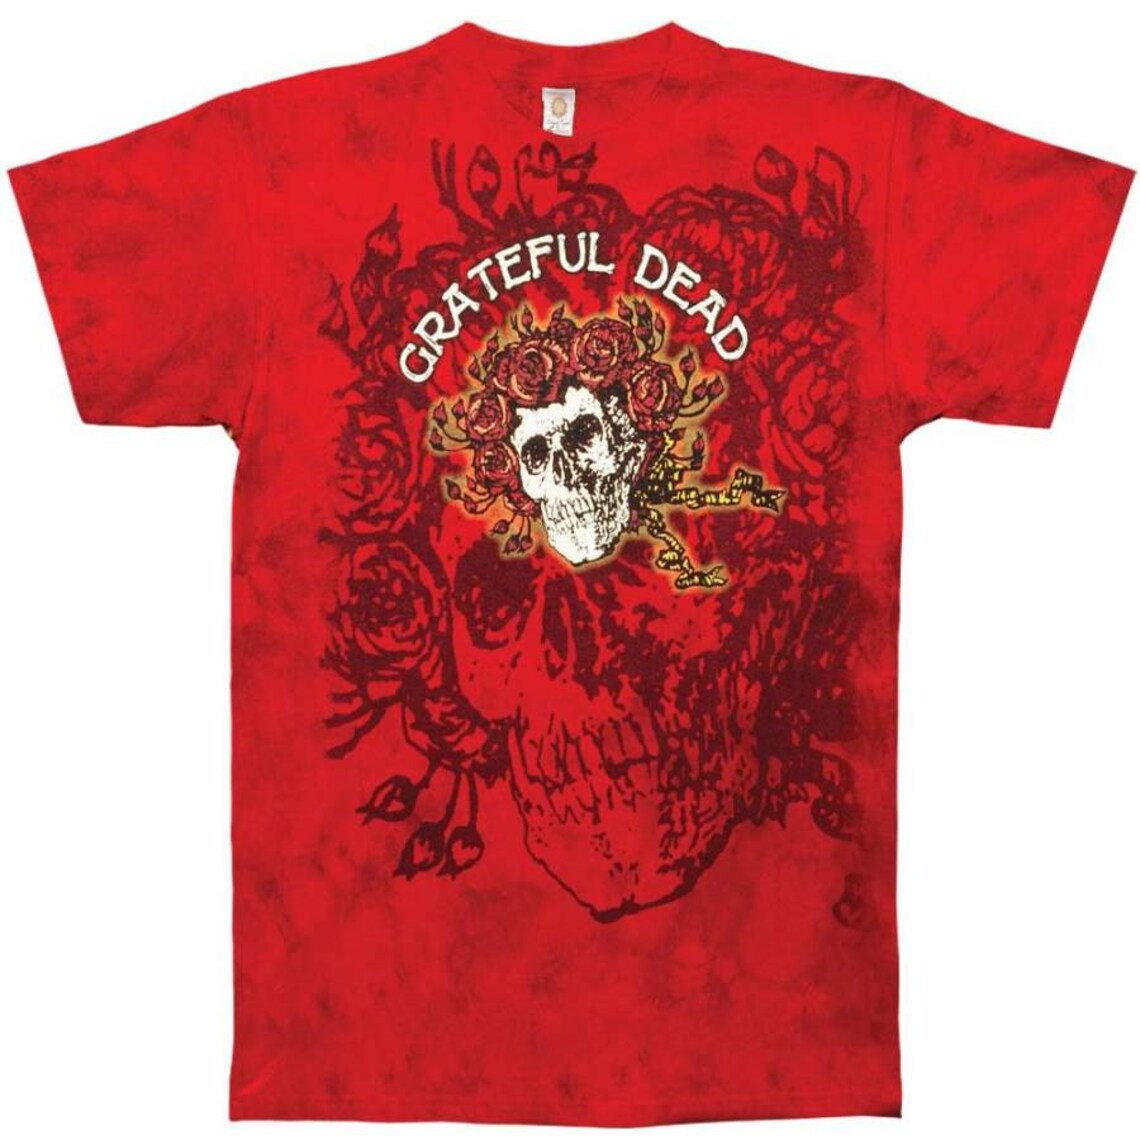 Grateful Dead Bertha shirt - Bertha tie dye shirt - Grateful Dead tie dye shirt- Dead and Company tie dye shirt - sizes: small, medium, large, XL, 2XL, 3XL and 4XL